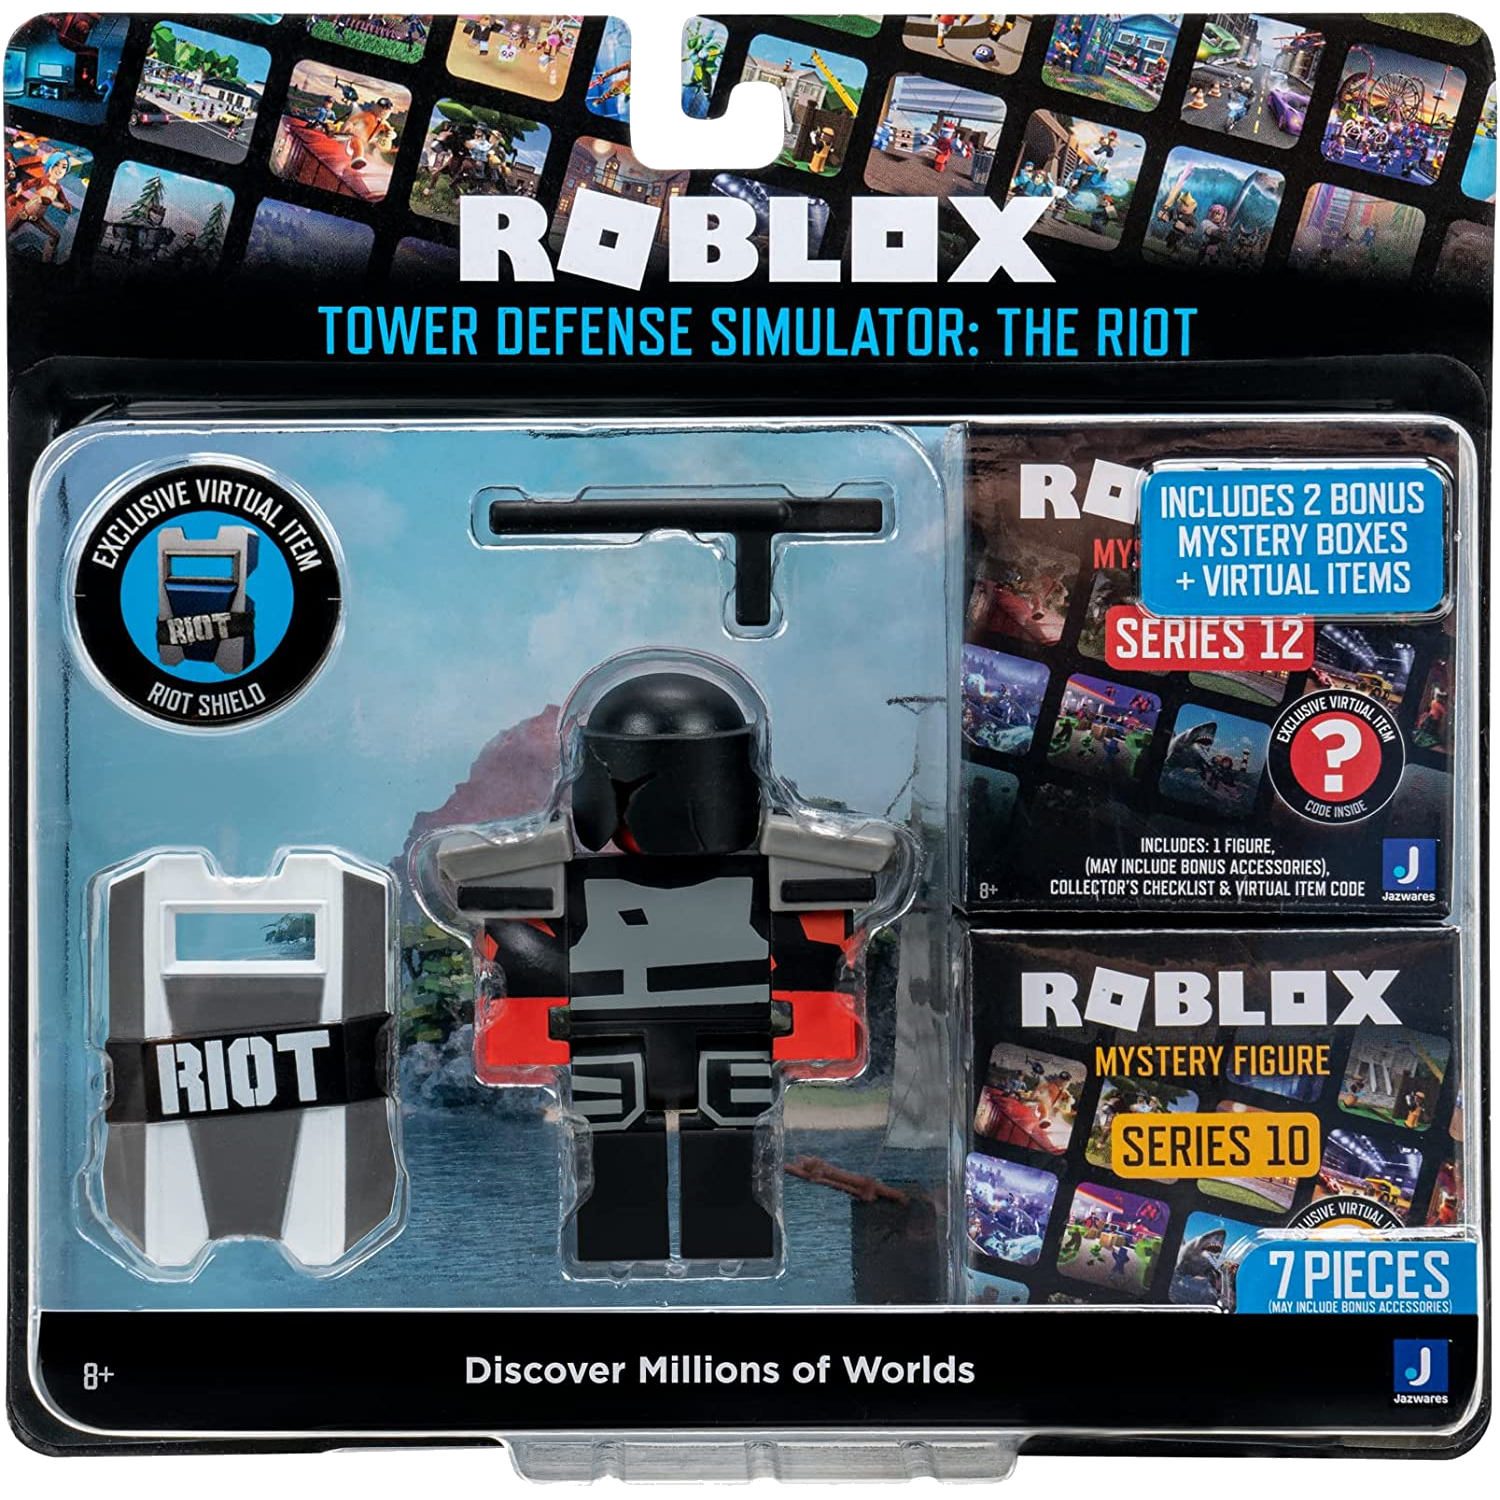 Roblox - TOWER DEFENSE SIMULATOR: THE RIOT & Exclusive Virtual